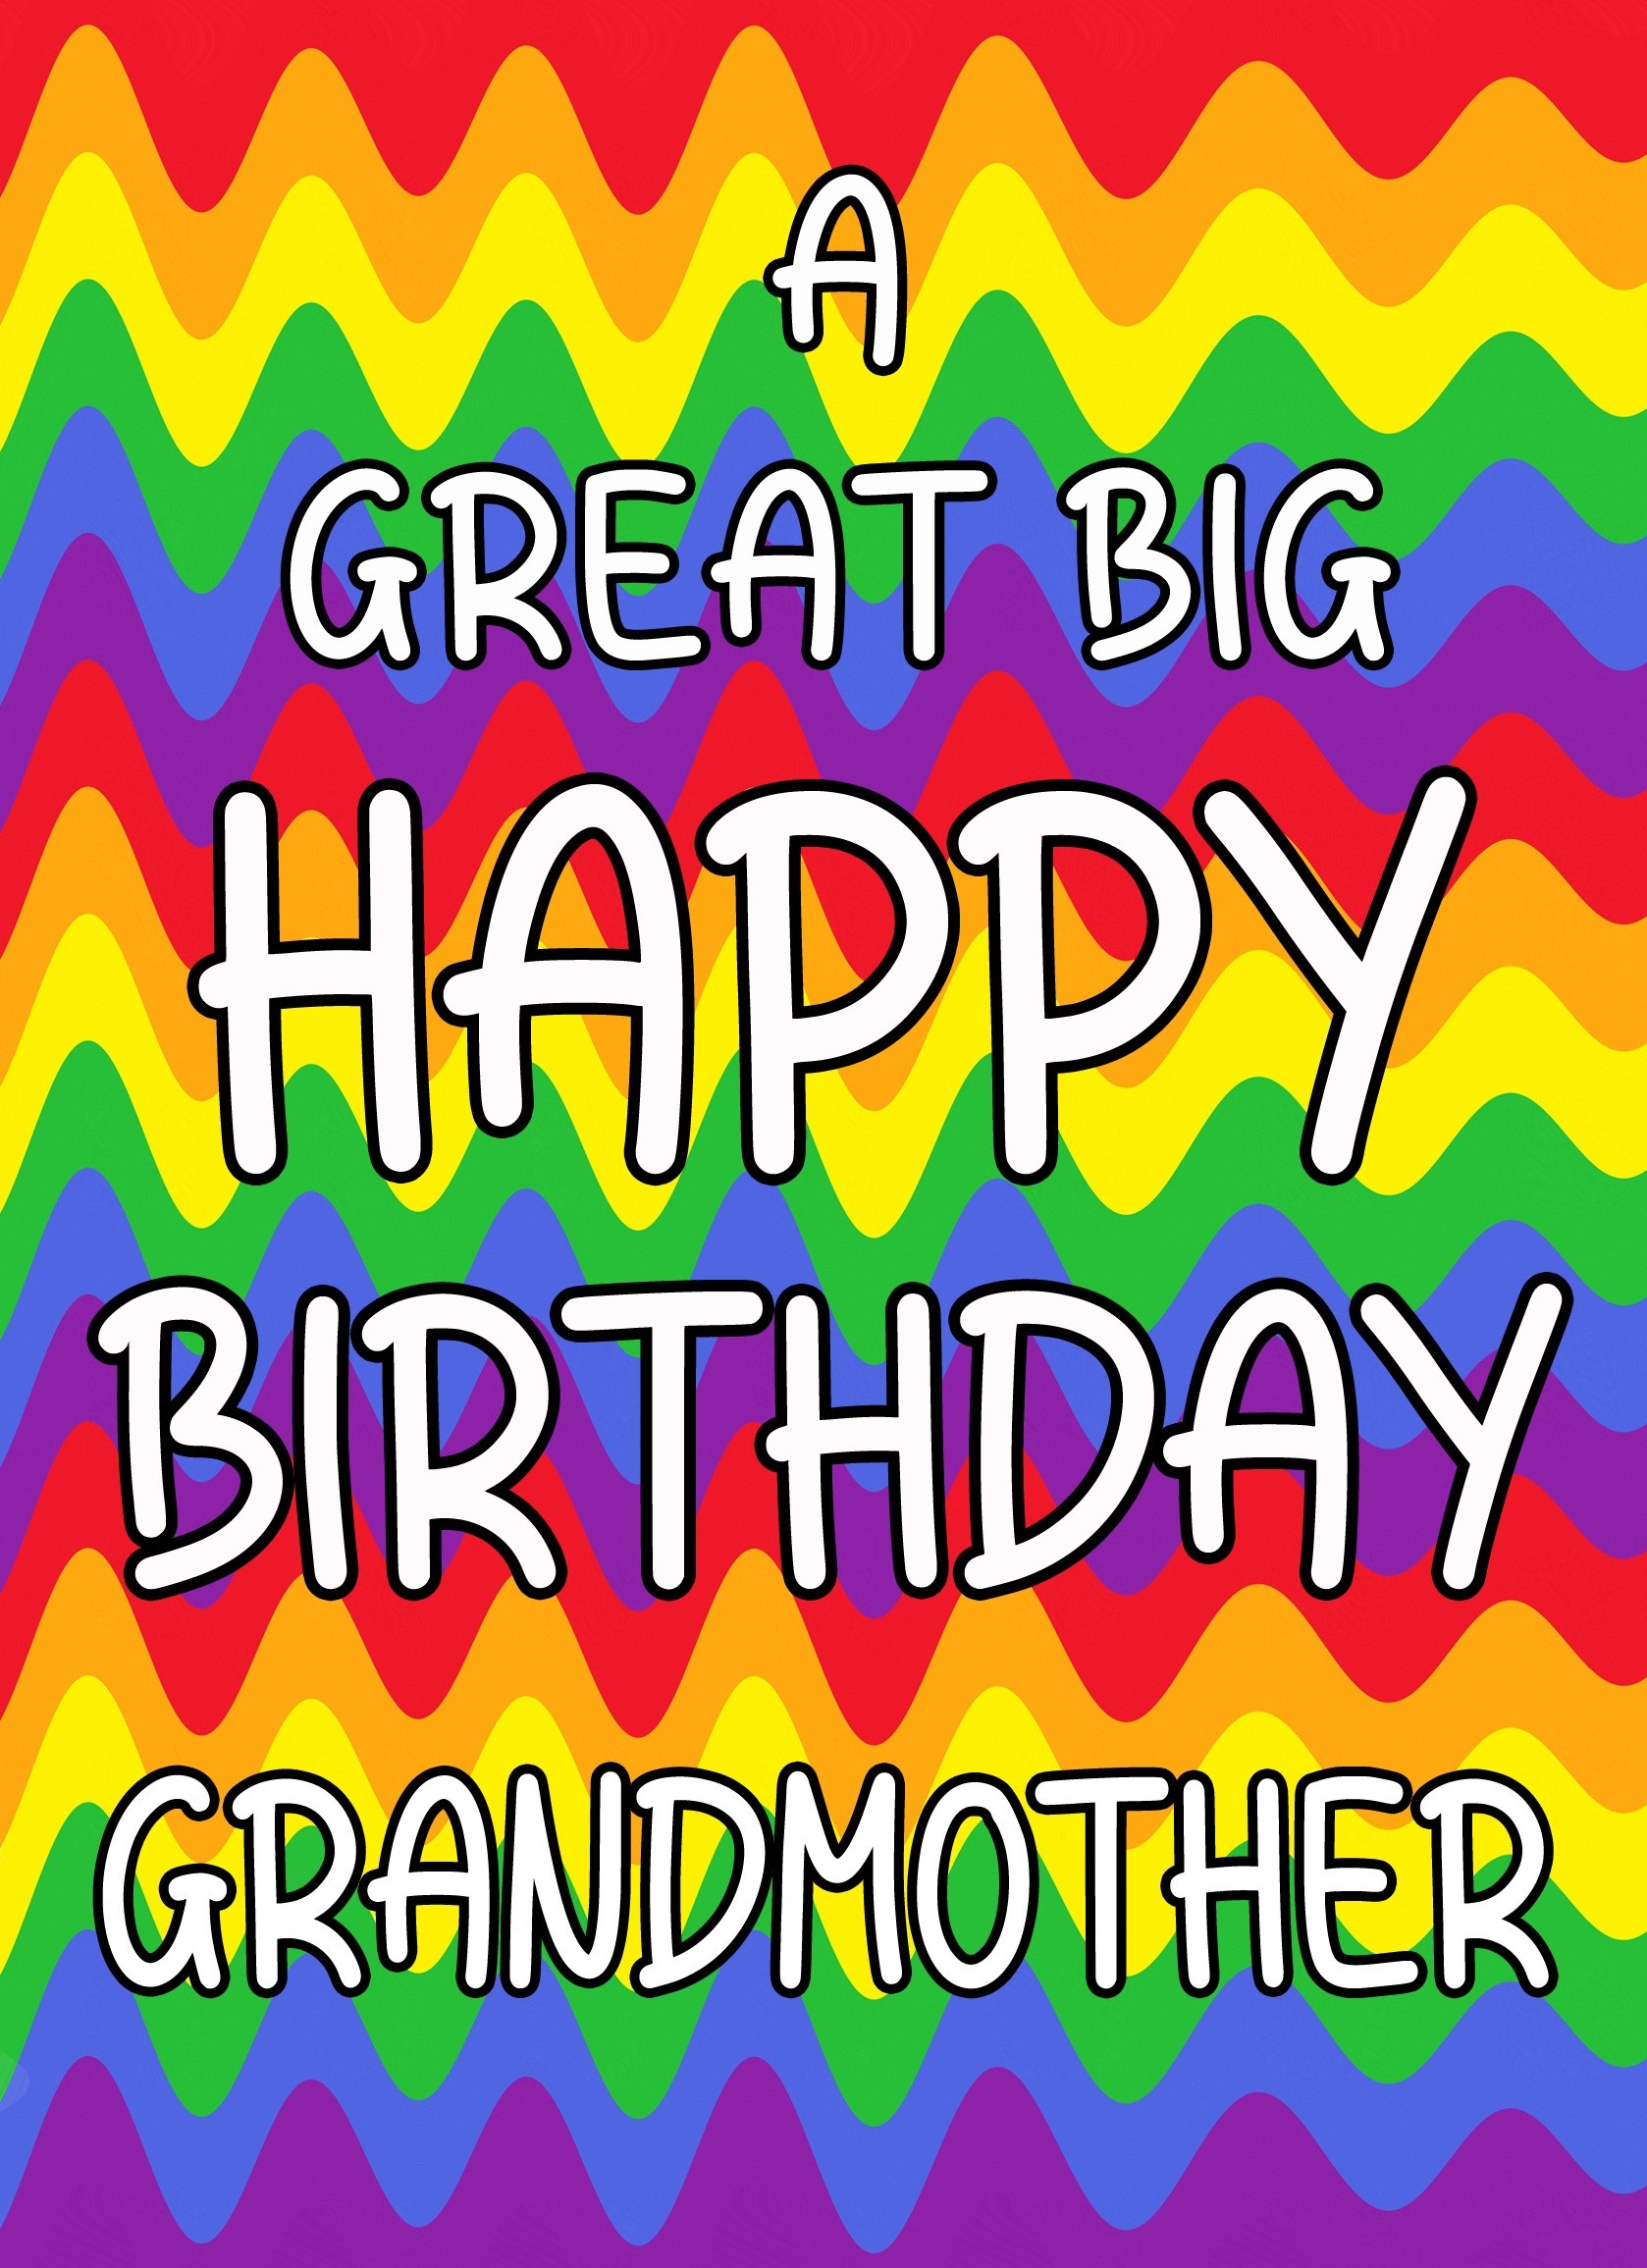 Happy Birthday 'Grandmother' Greeting Card (Rainbow)